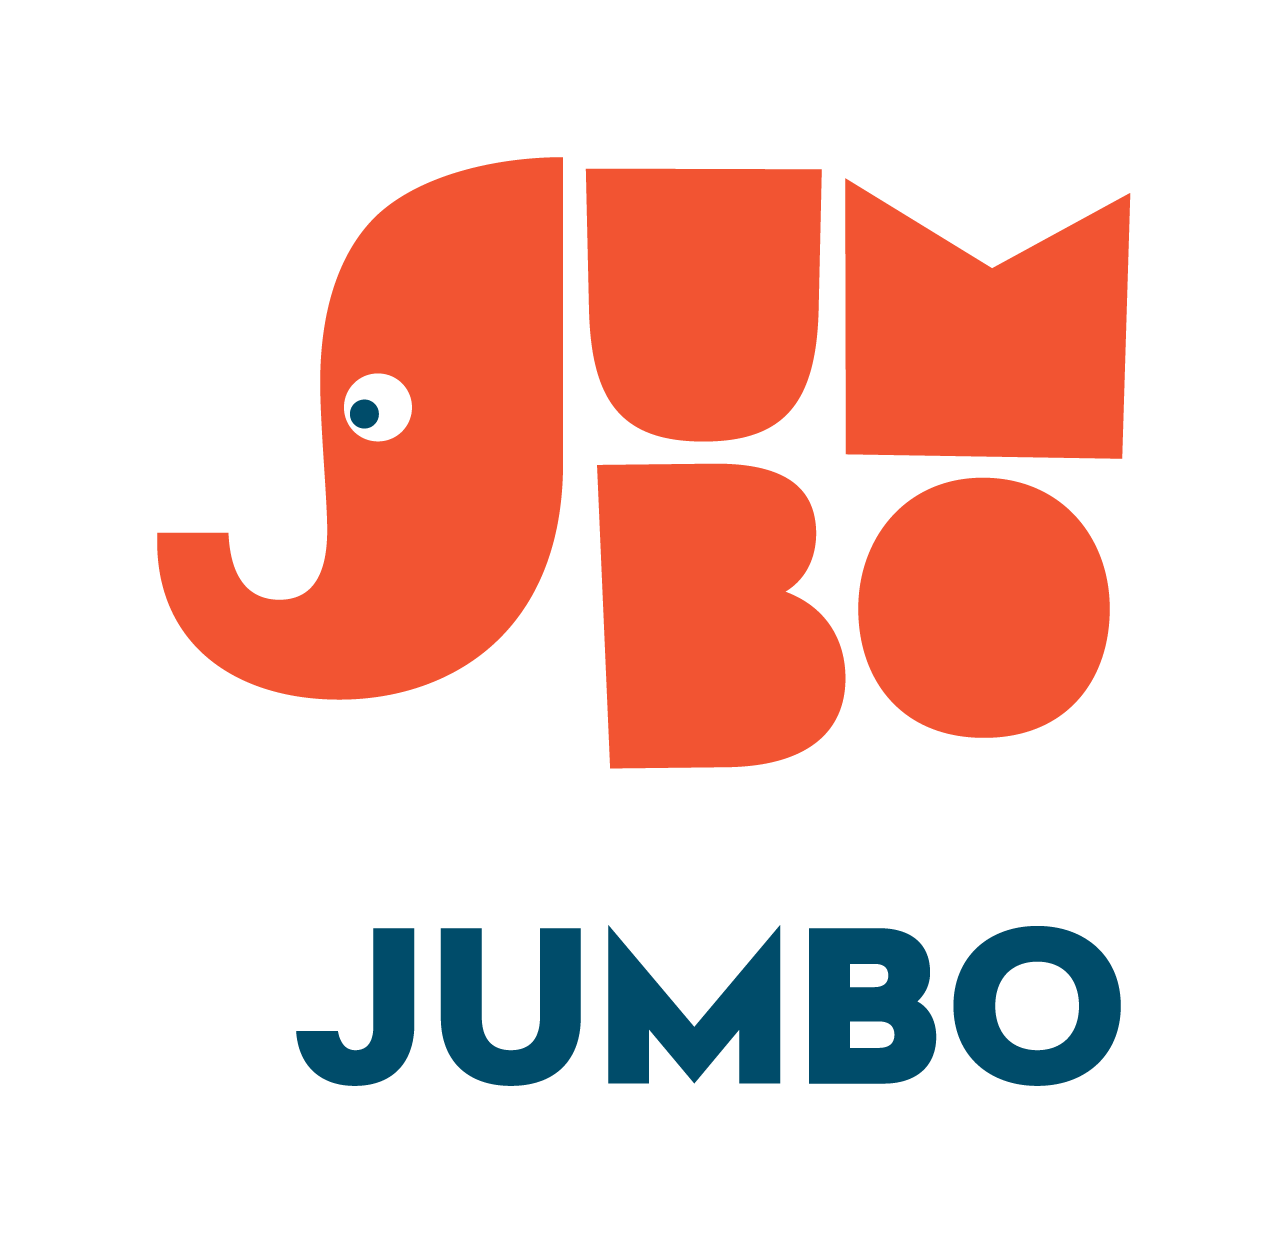 Jumbo Interactive logo